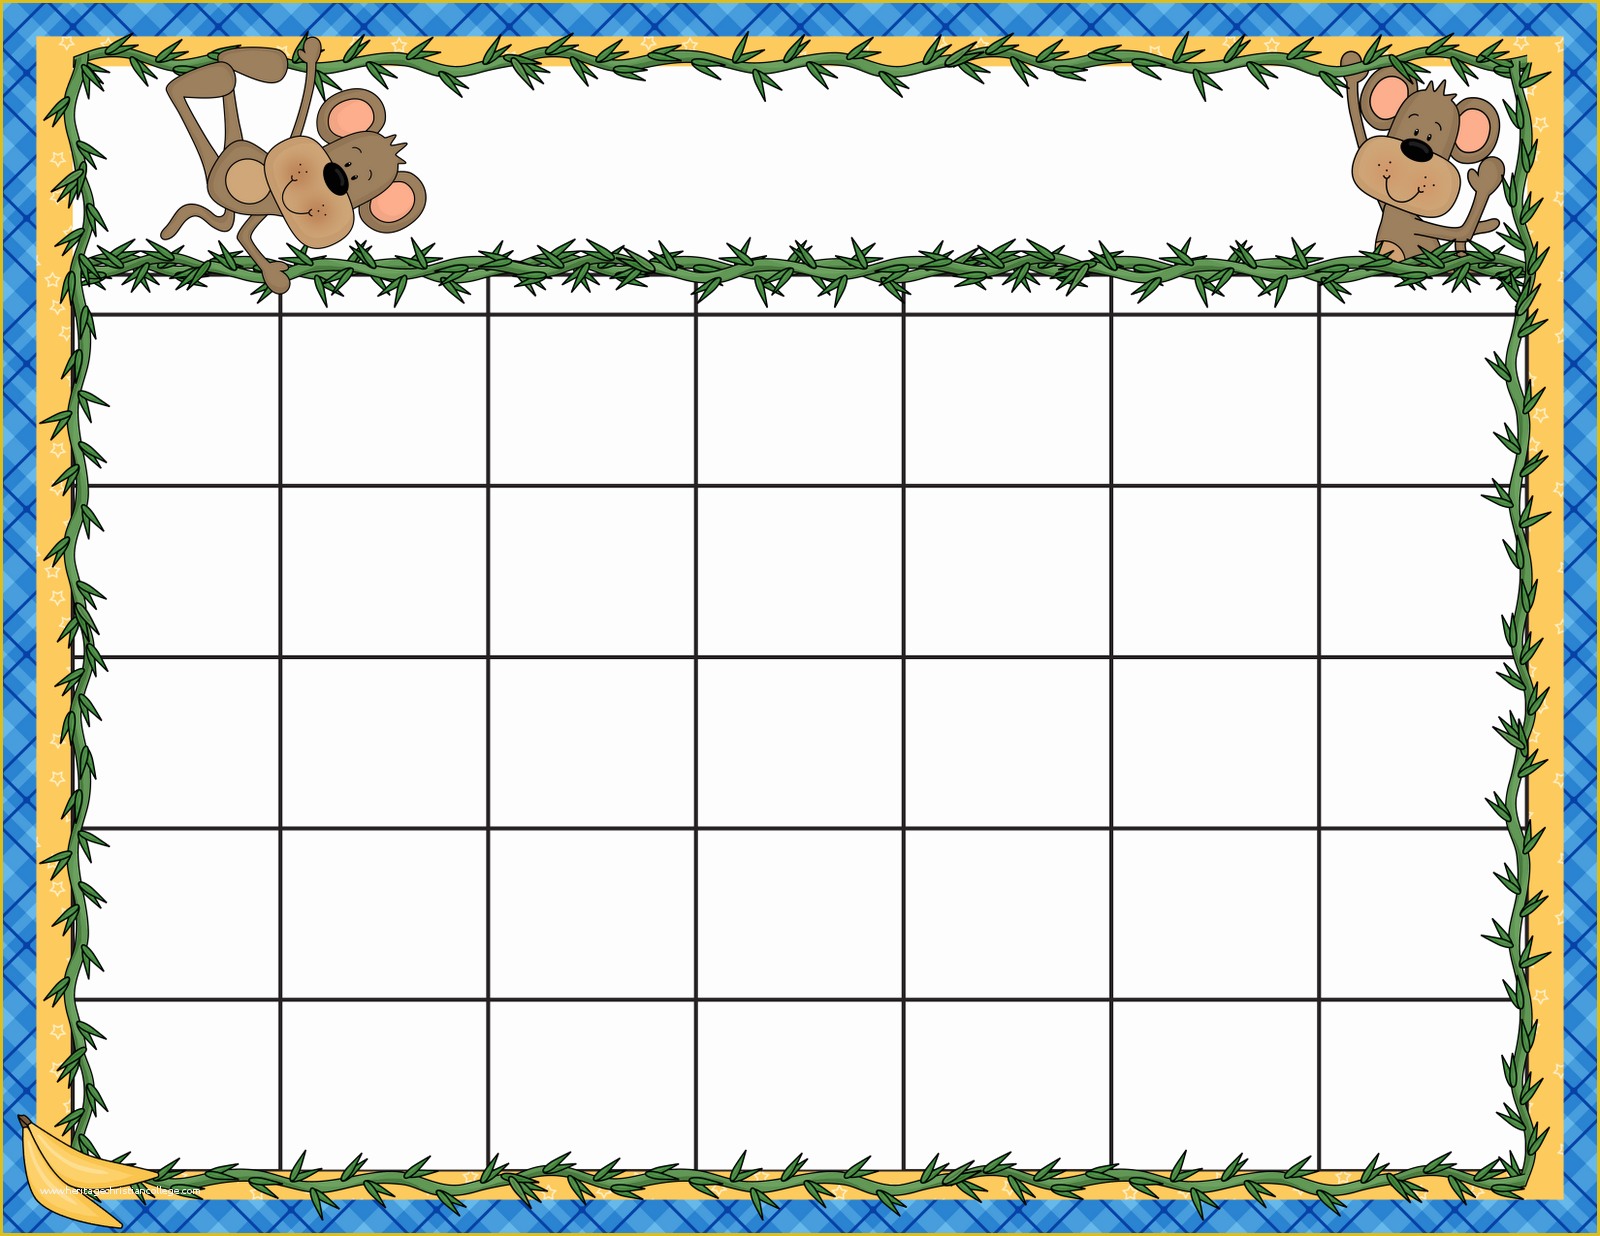 Free Preschool Calendar Templates 2018 Of Preschool Calendar Clipart